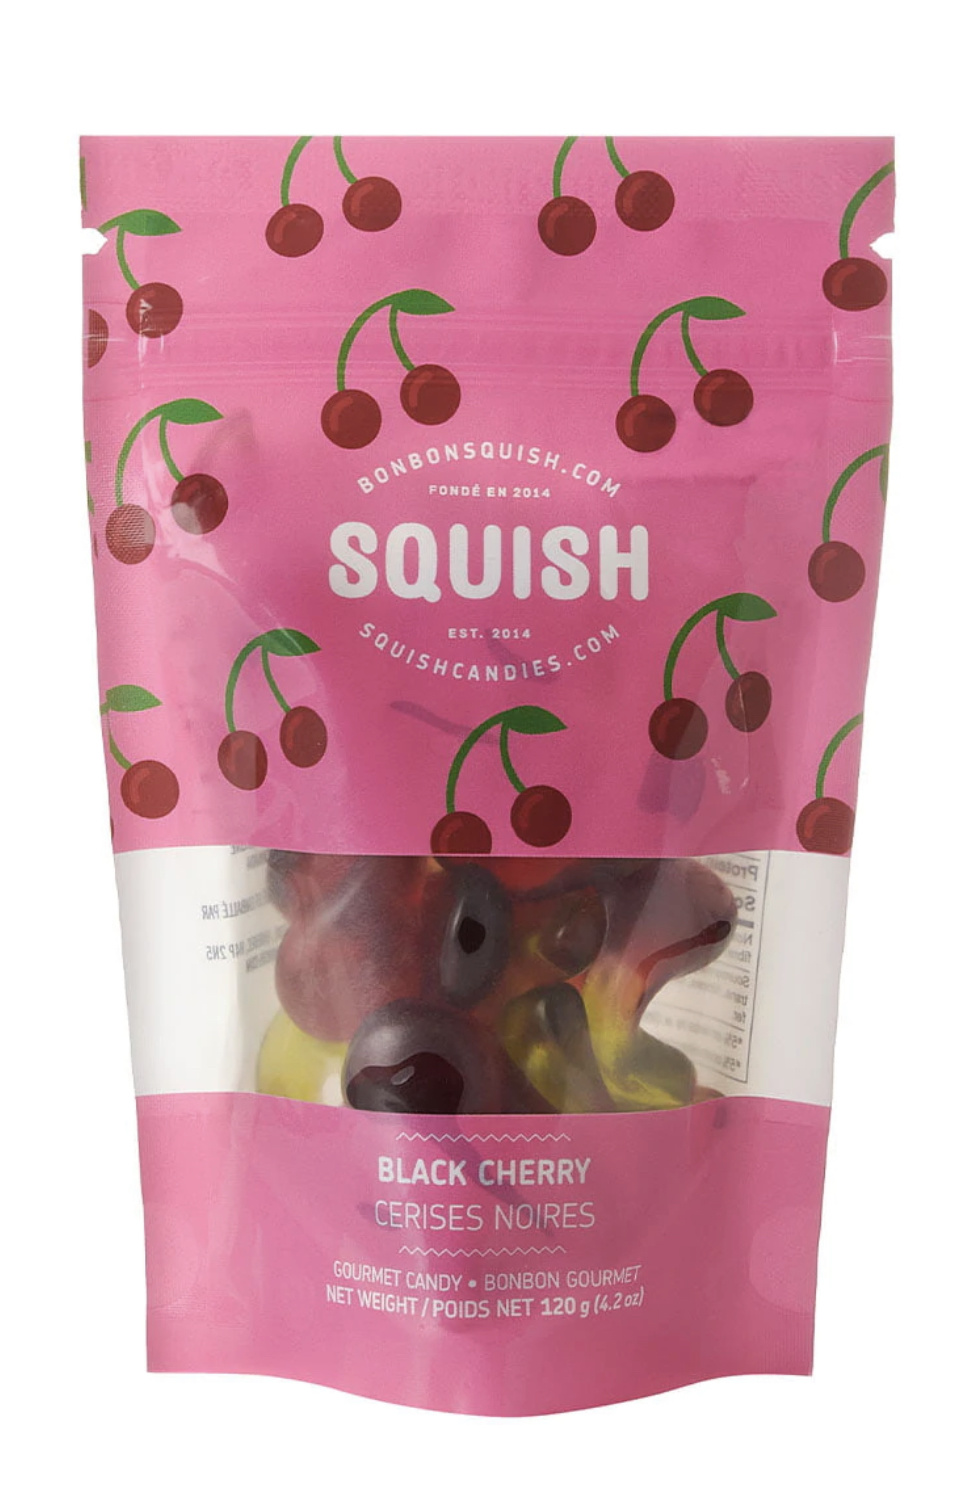 Squish Candy Black Cherry by Squish